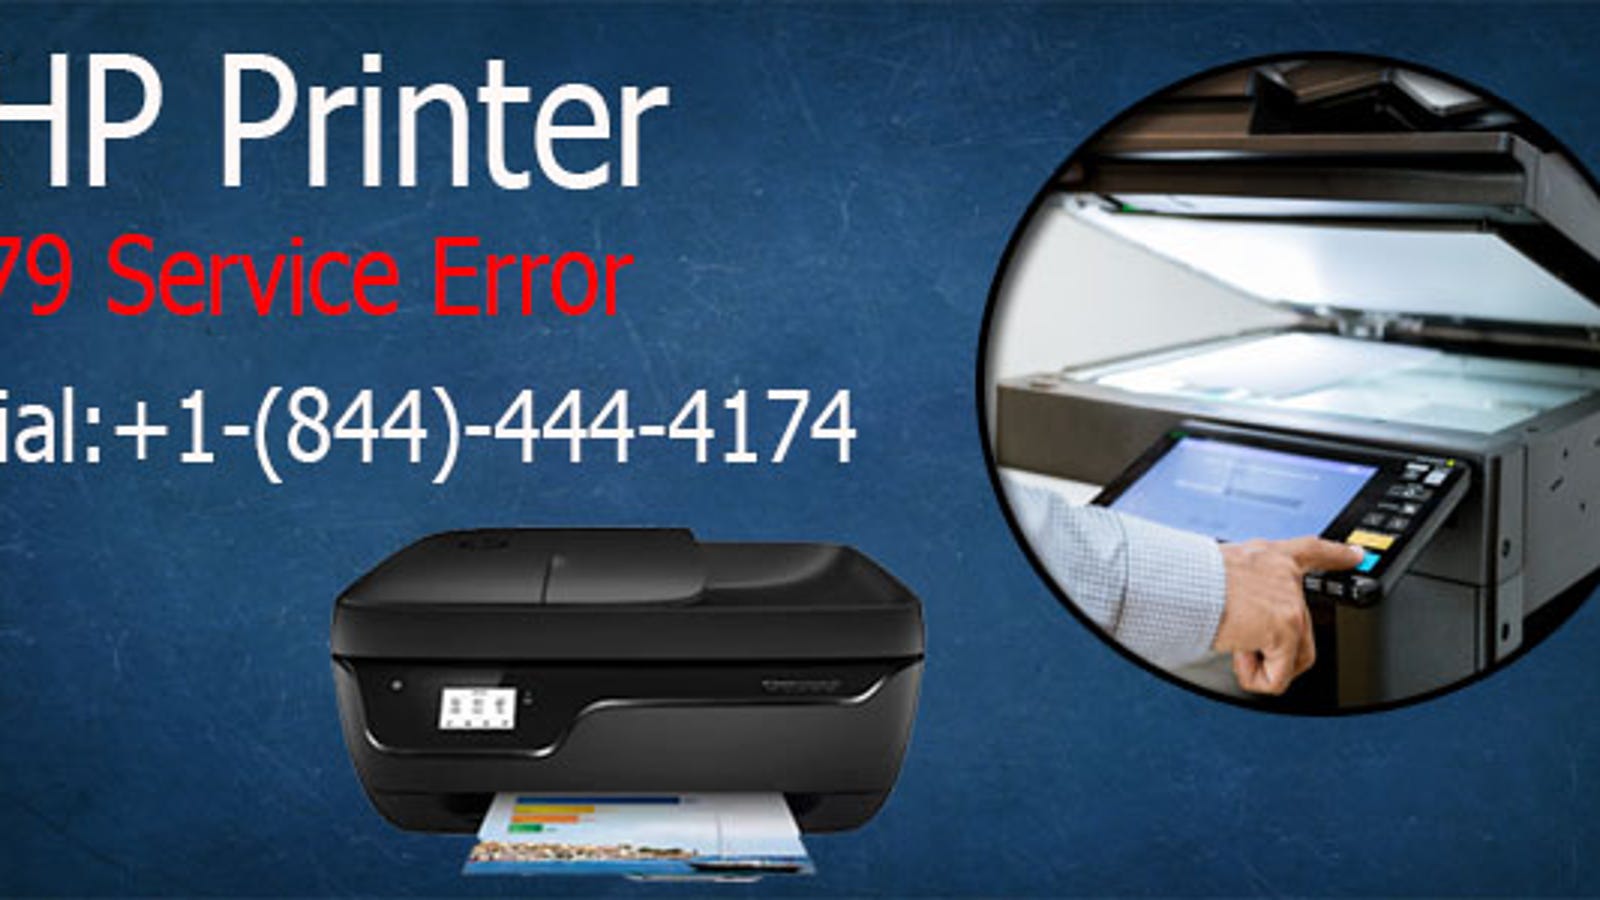 Get Rid of HP Printer 79 Service Error | Dial+1-(844)-444-4174